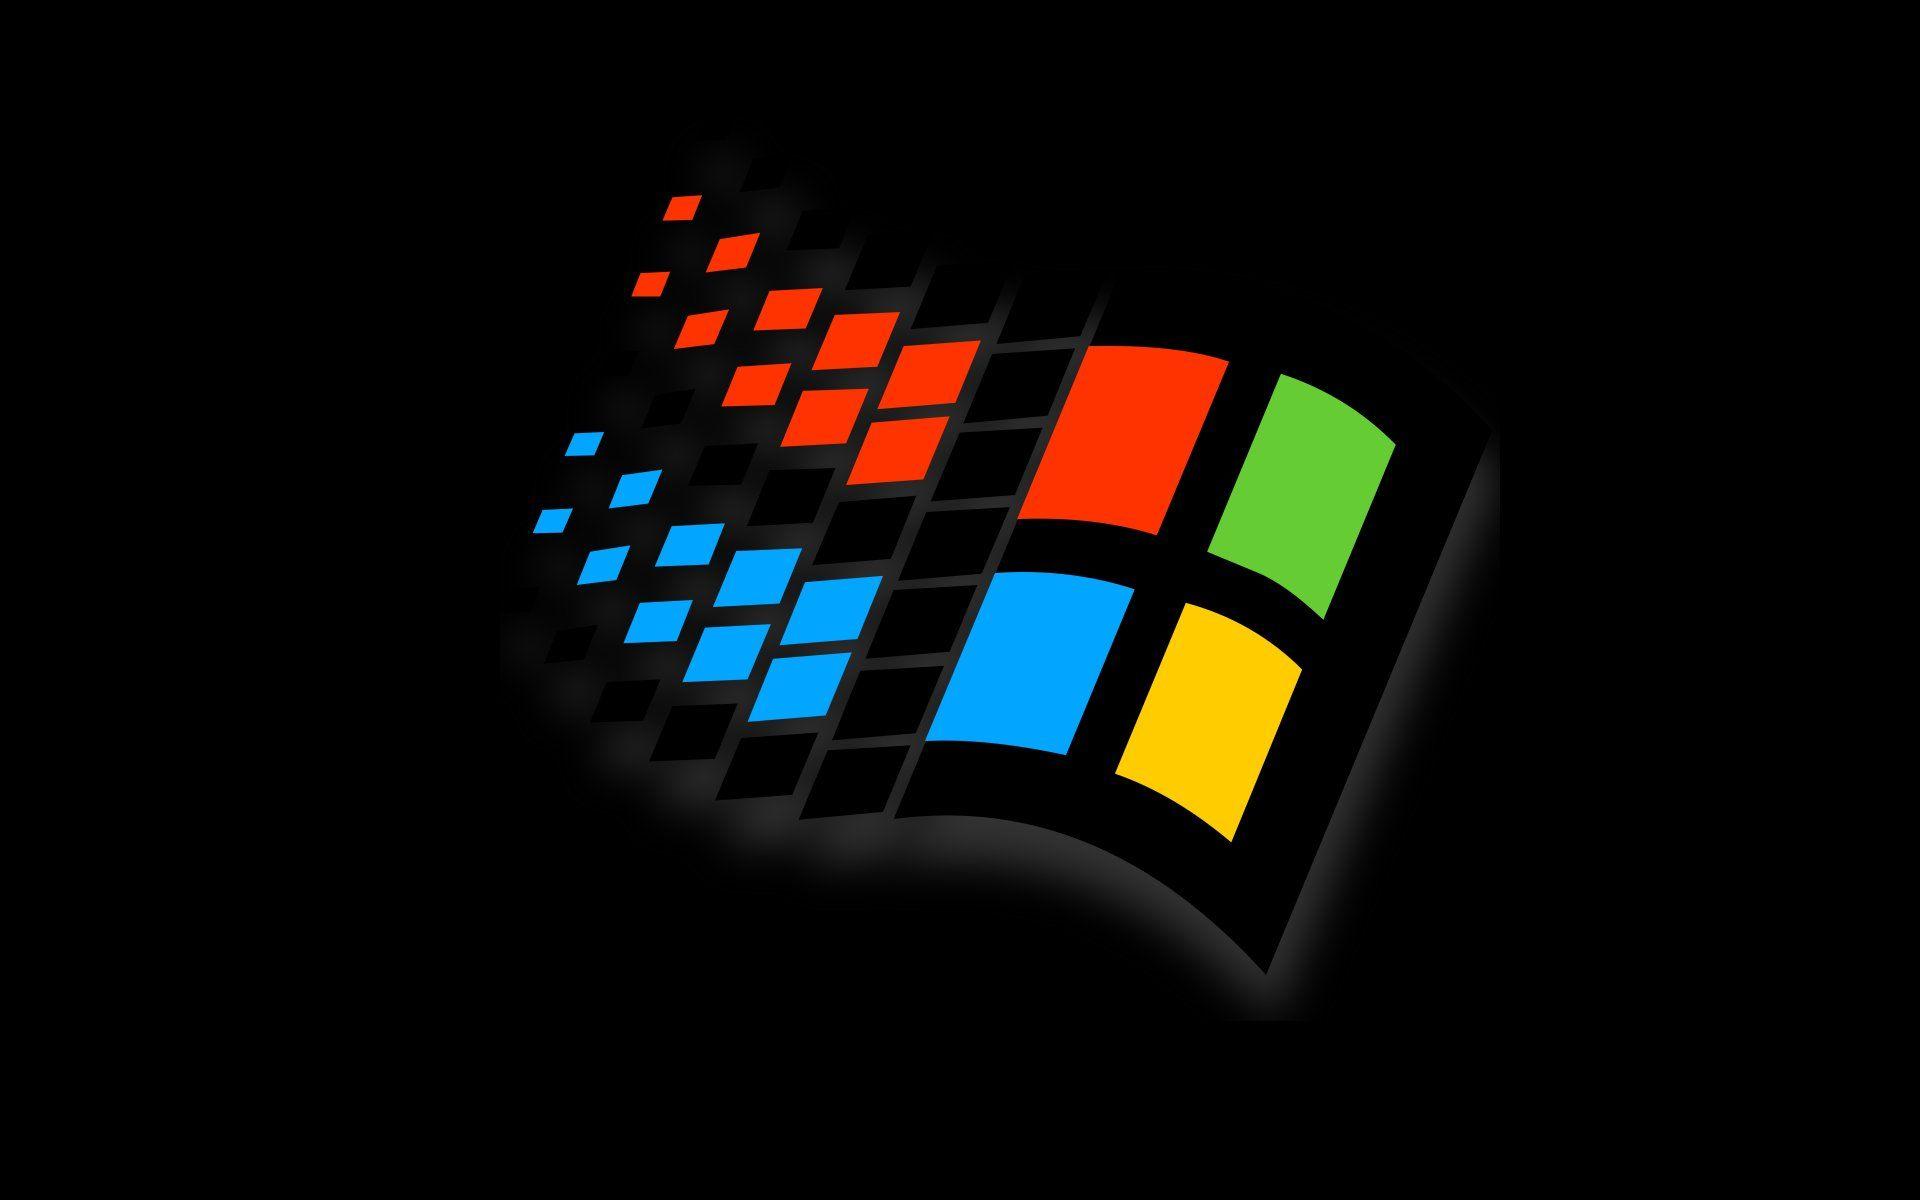 Windows 98 Backgrounds